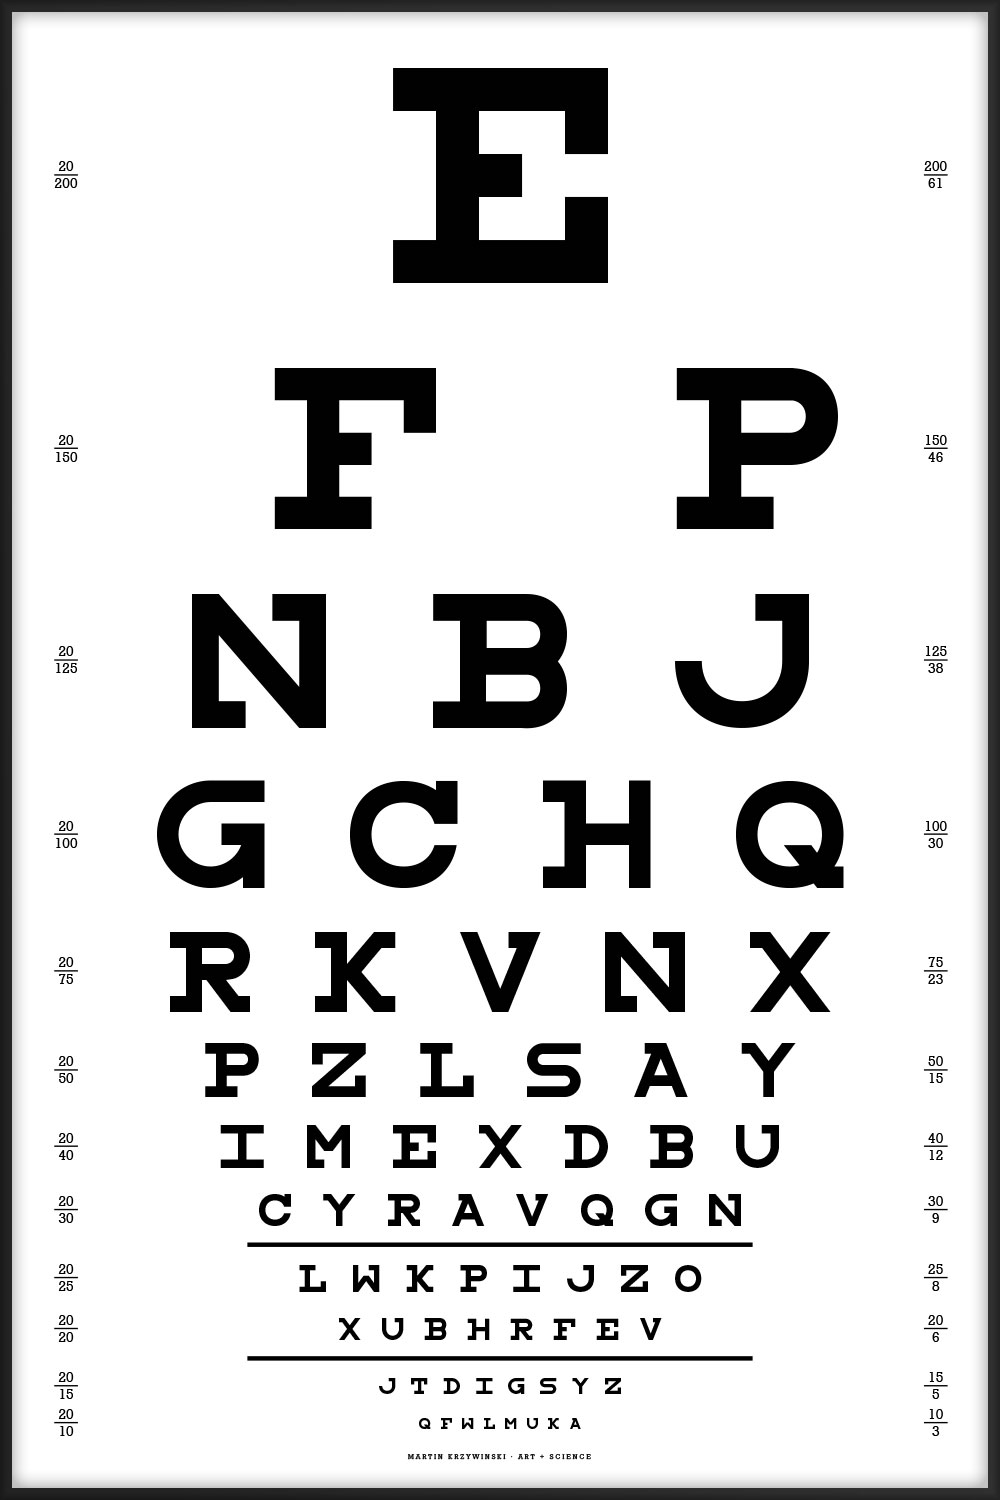 Snellen eye chart - full alphabet by Martin Krzywinski